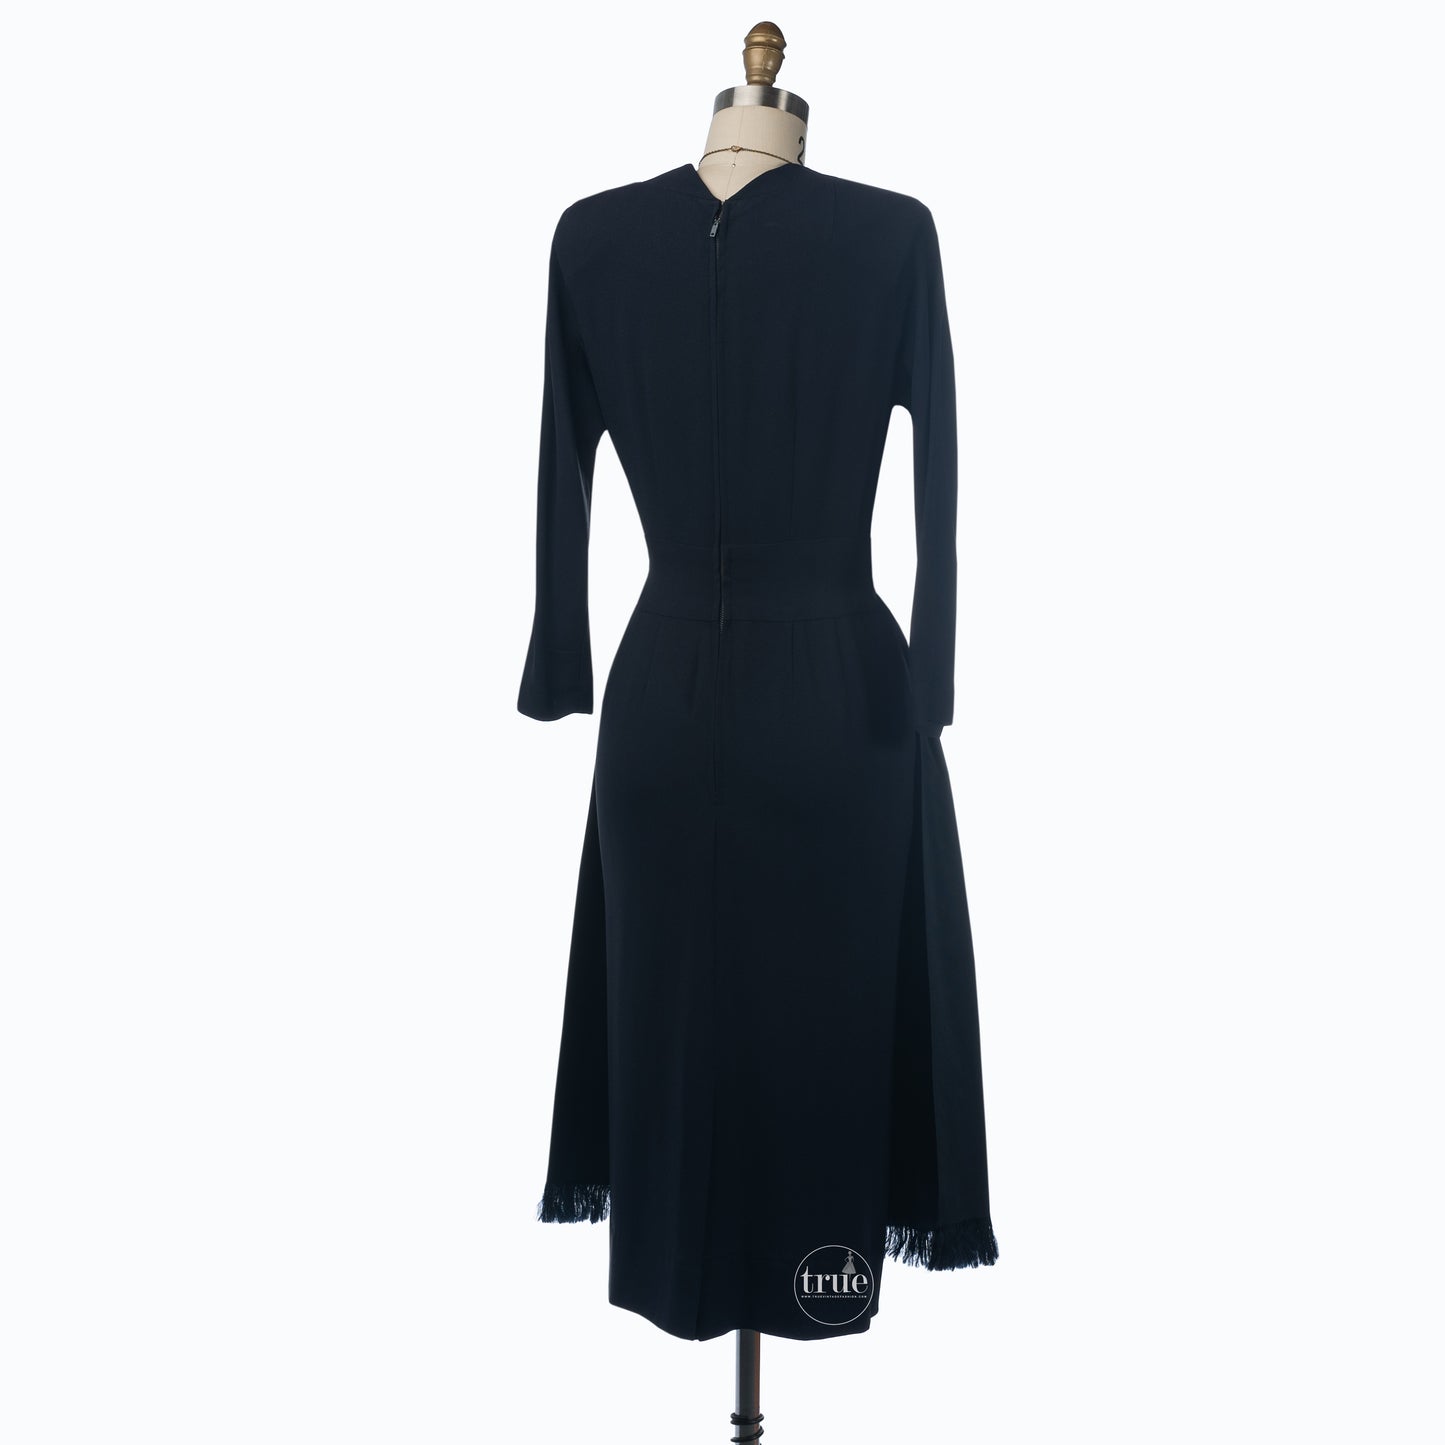 1950's SUBURBAN navy crepe dress